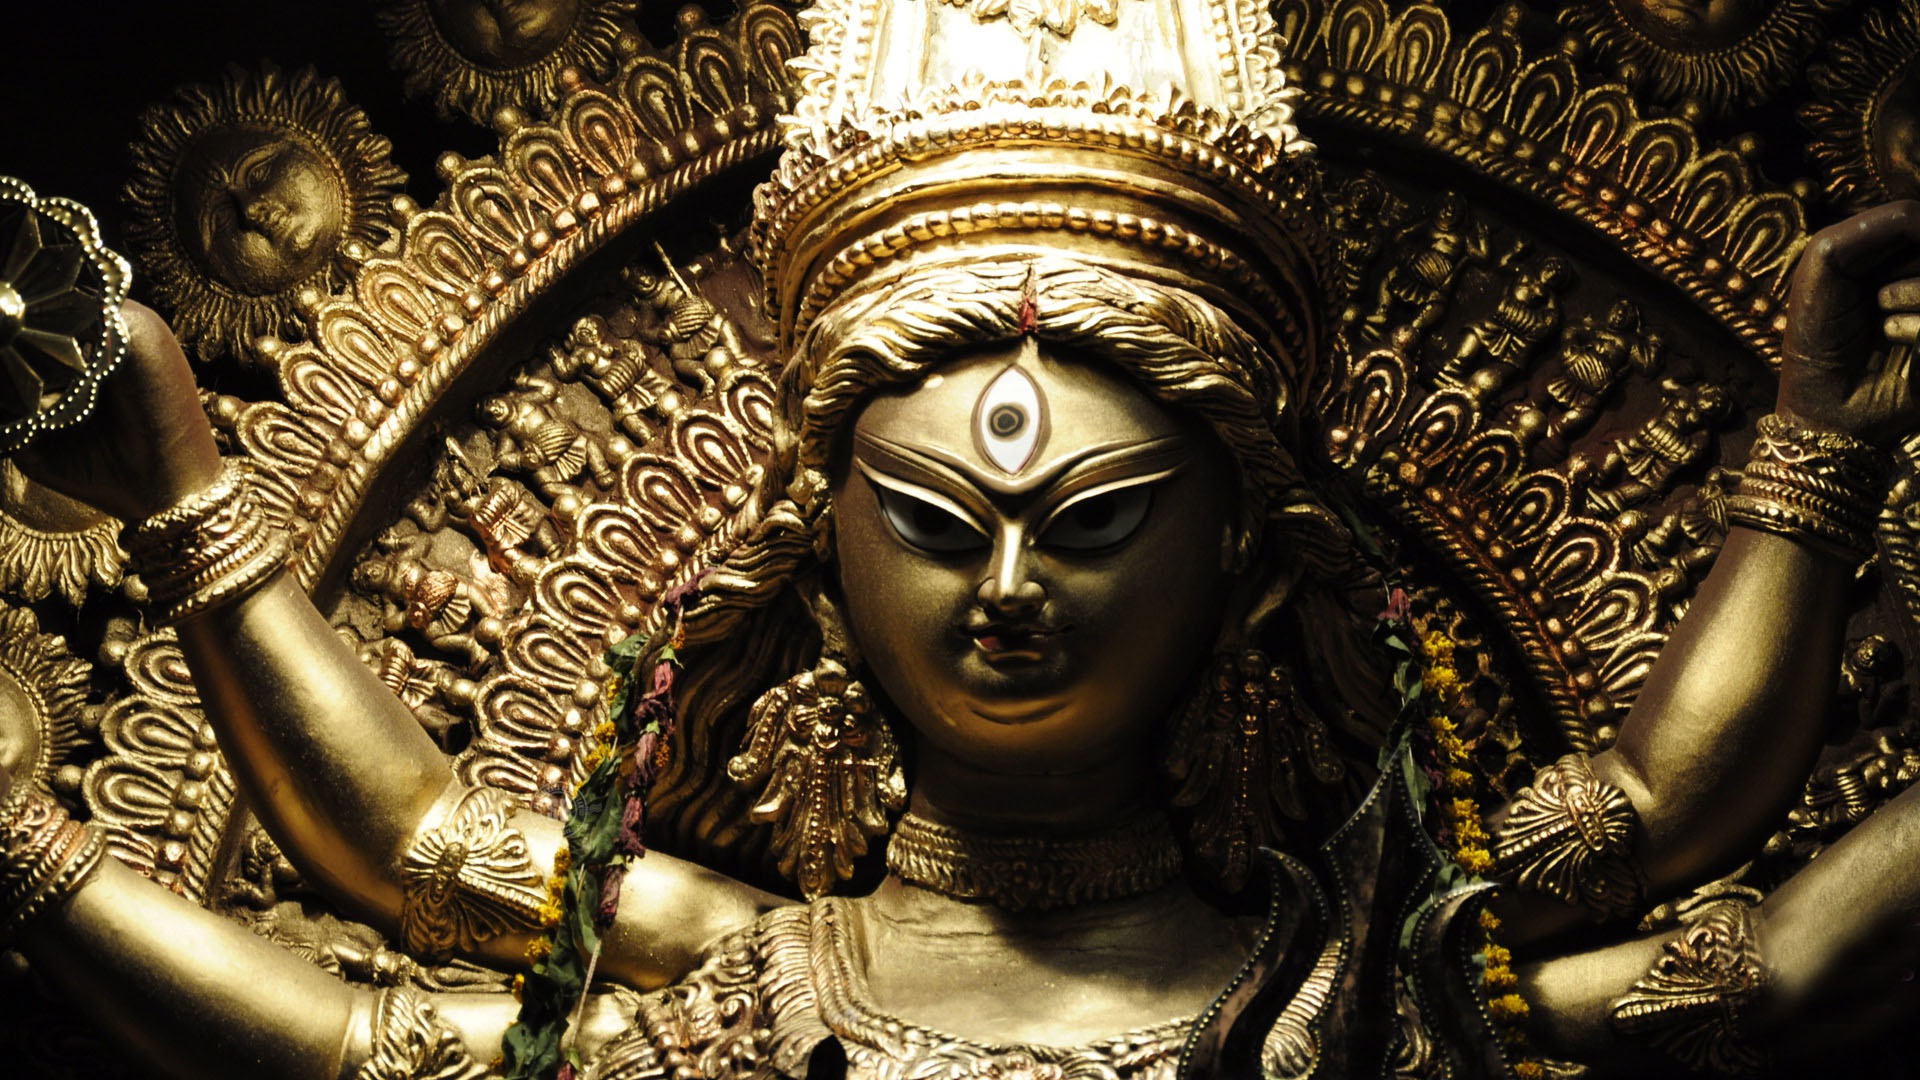 Maa Durga Face Hd Image